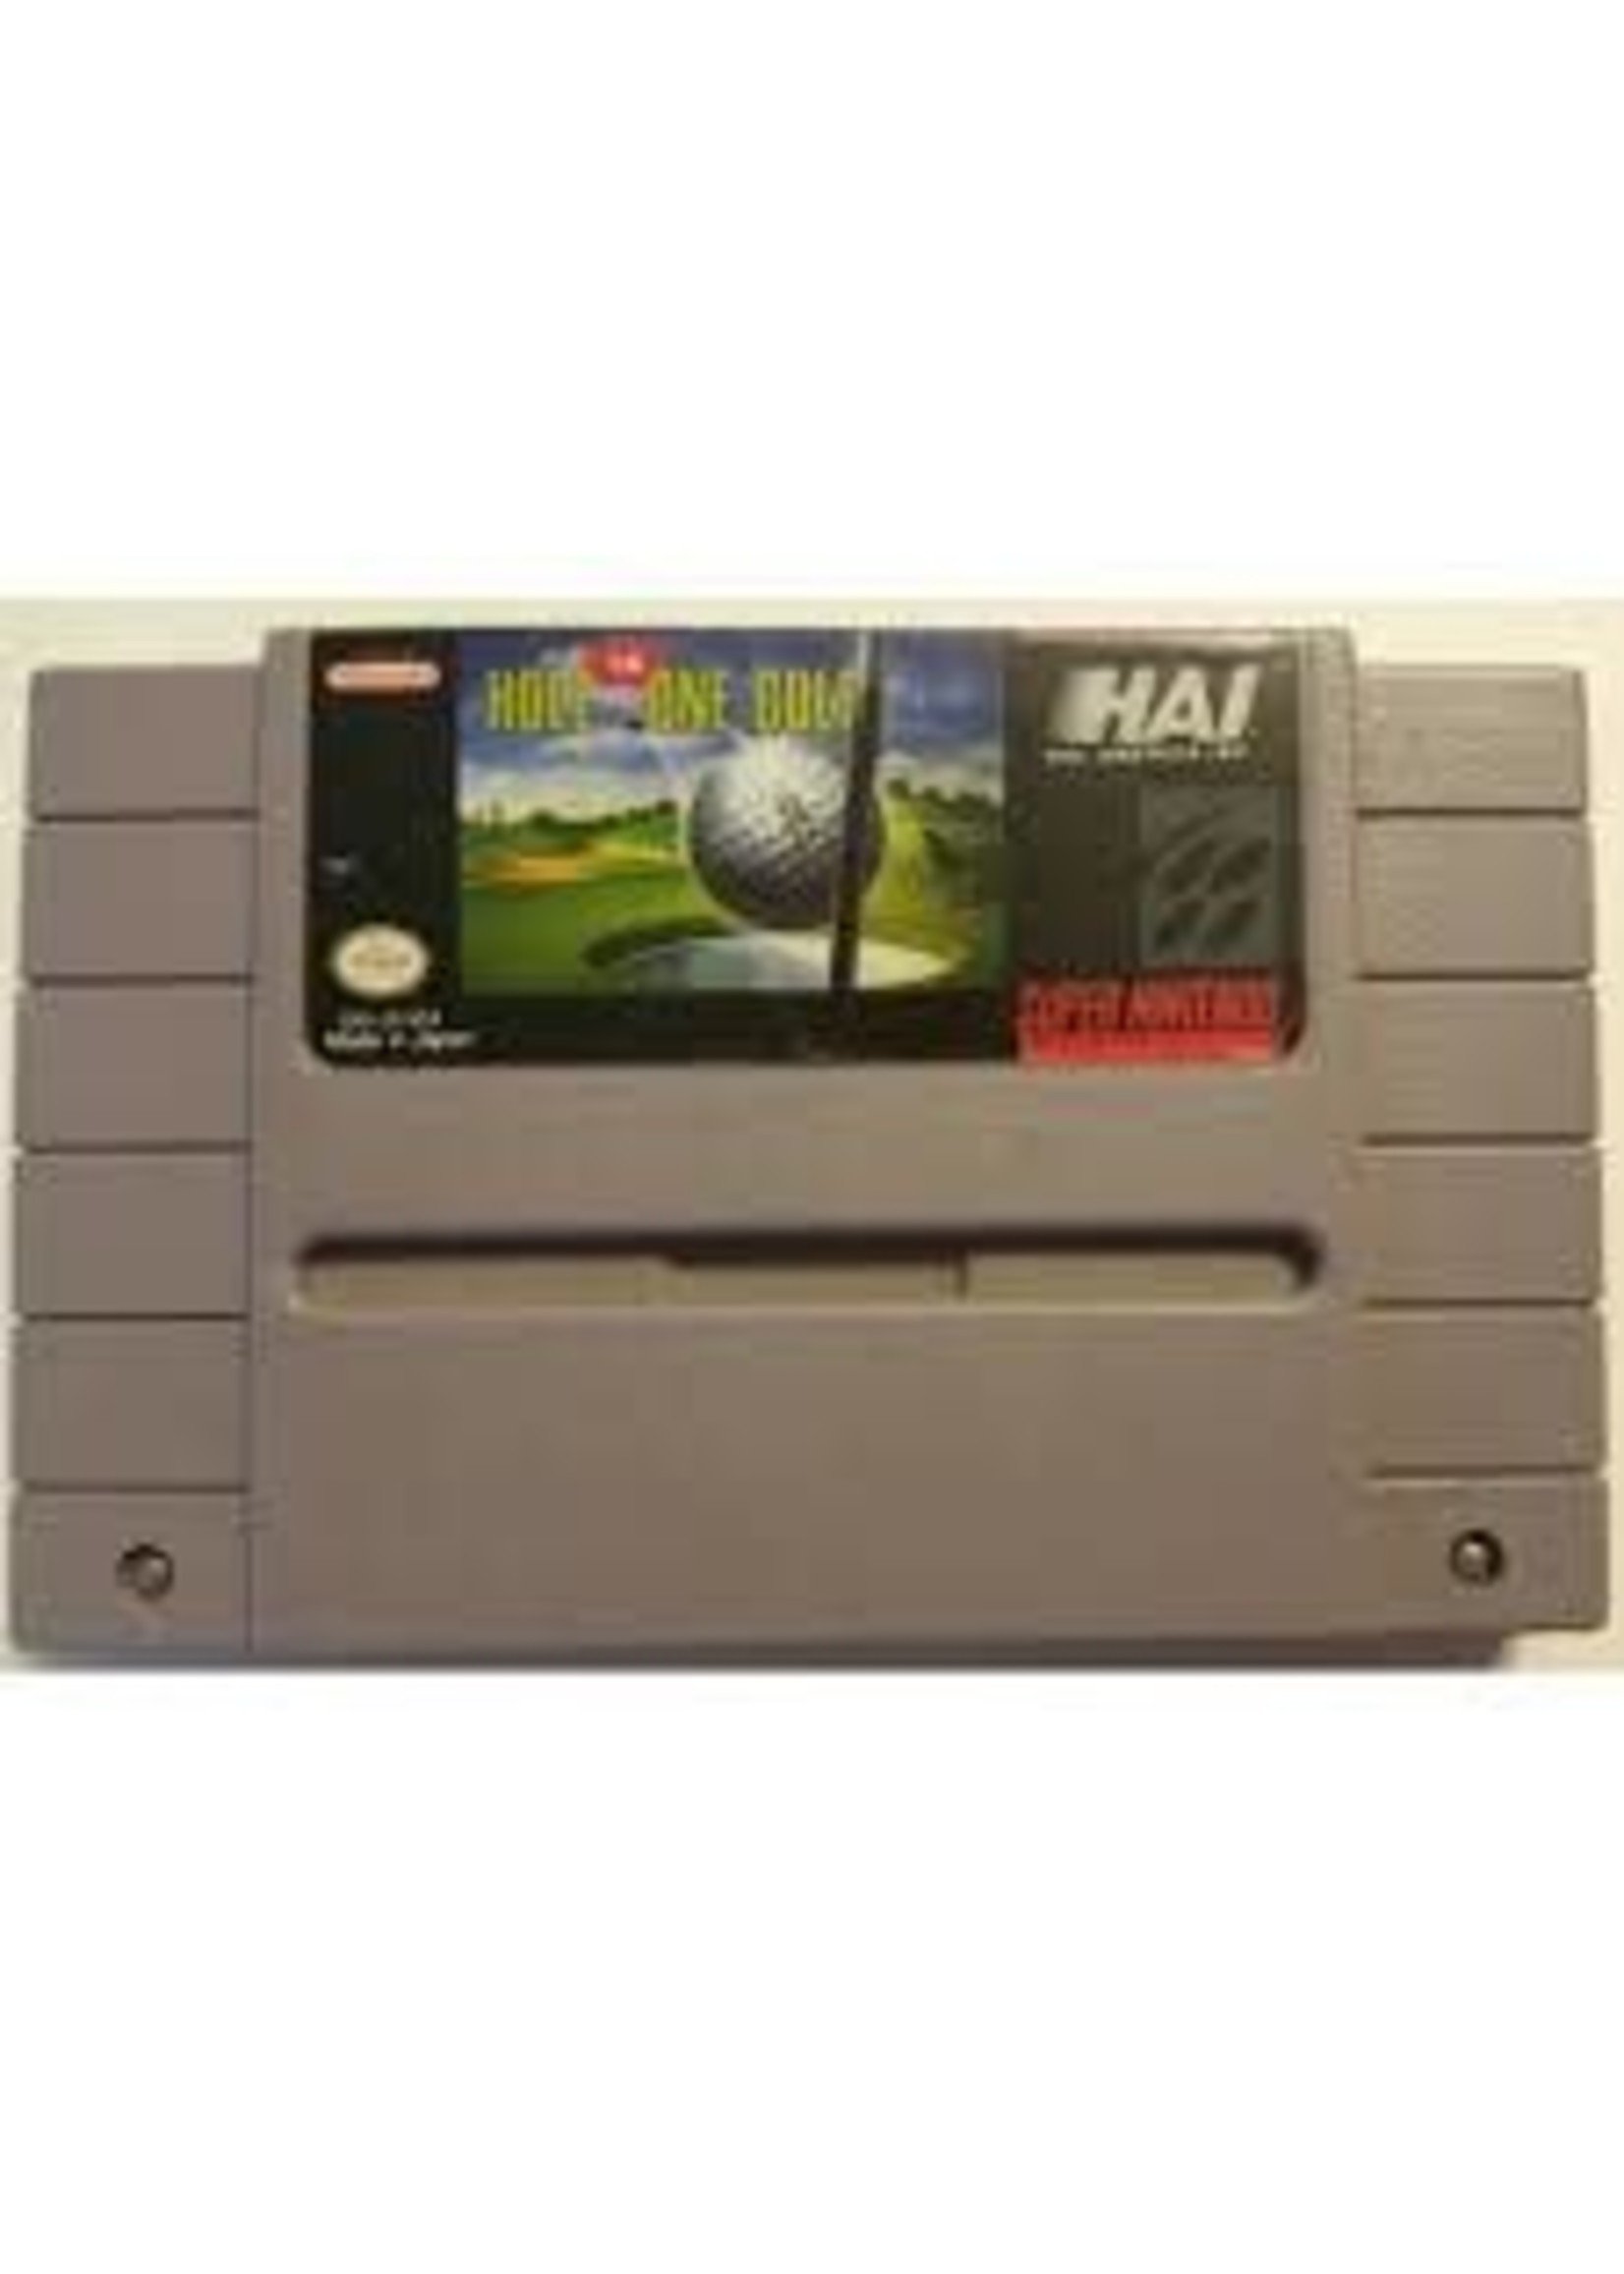 Nintendo Super Nintendo (SNES) Hal's Hole in One Golf